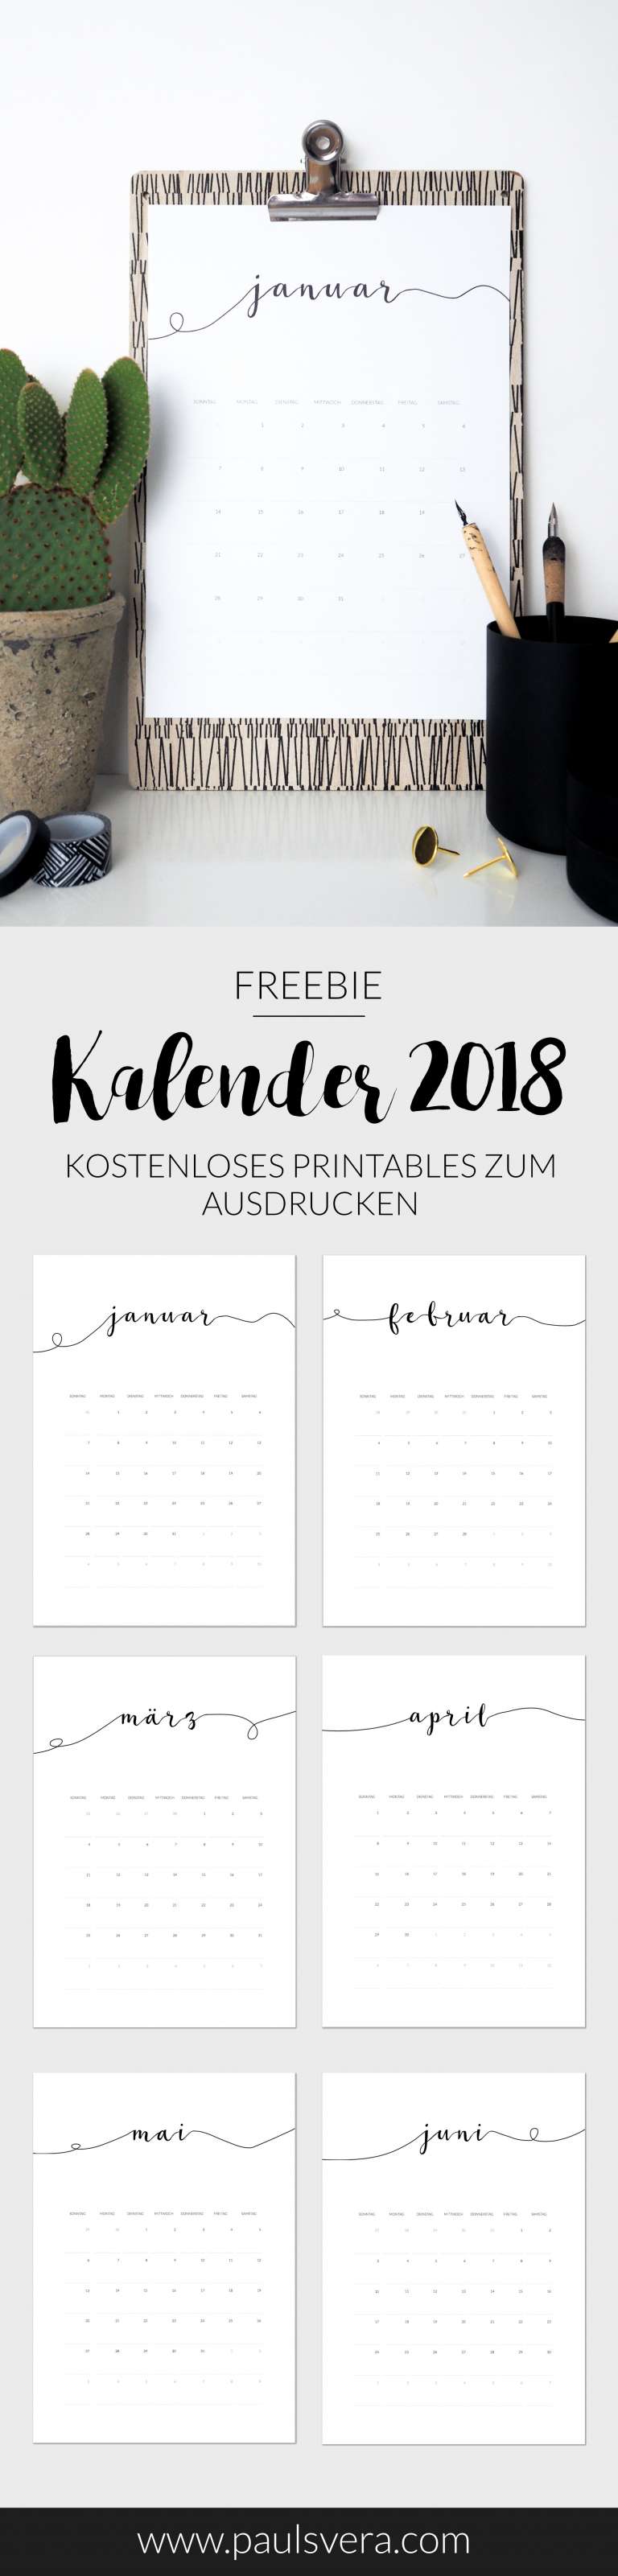 Freebie: Kalender 2018 als kostenloses Printables